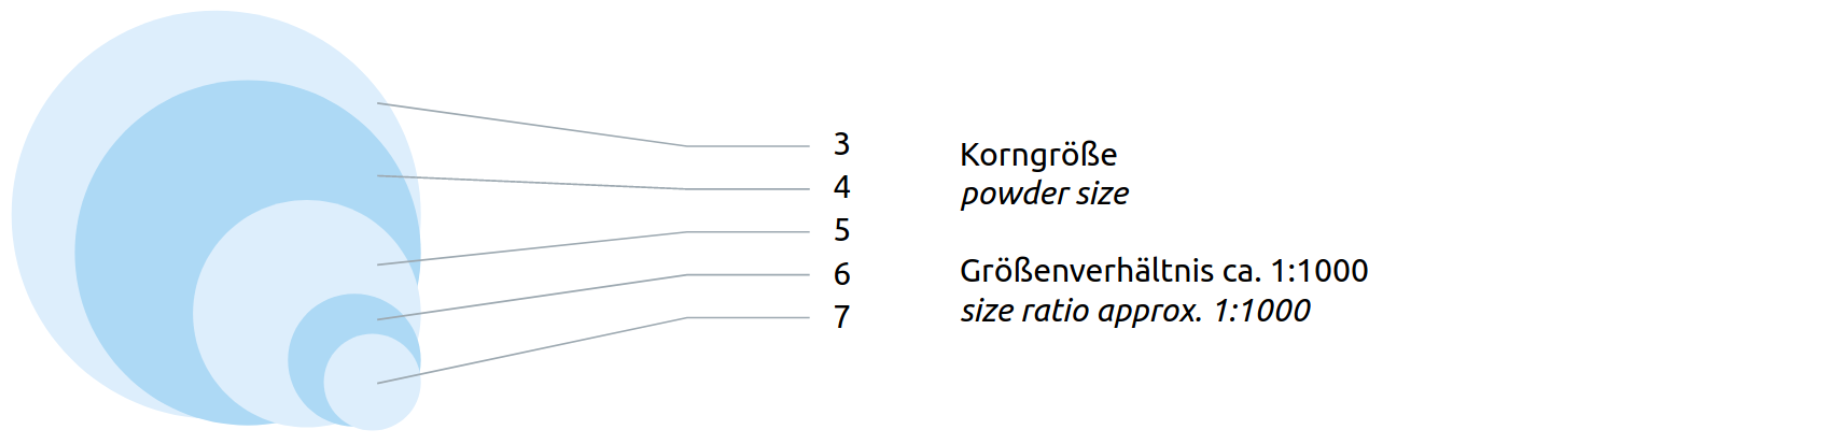 Almit powder sizes according image